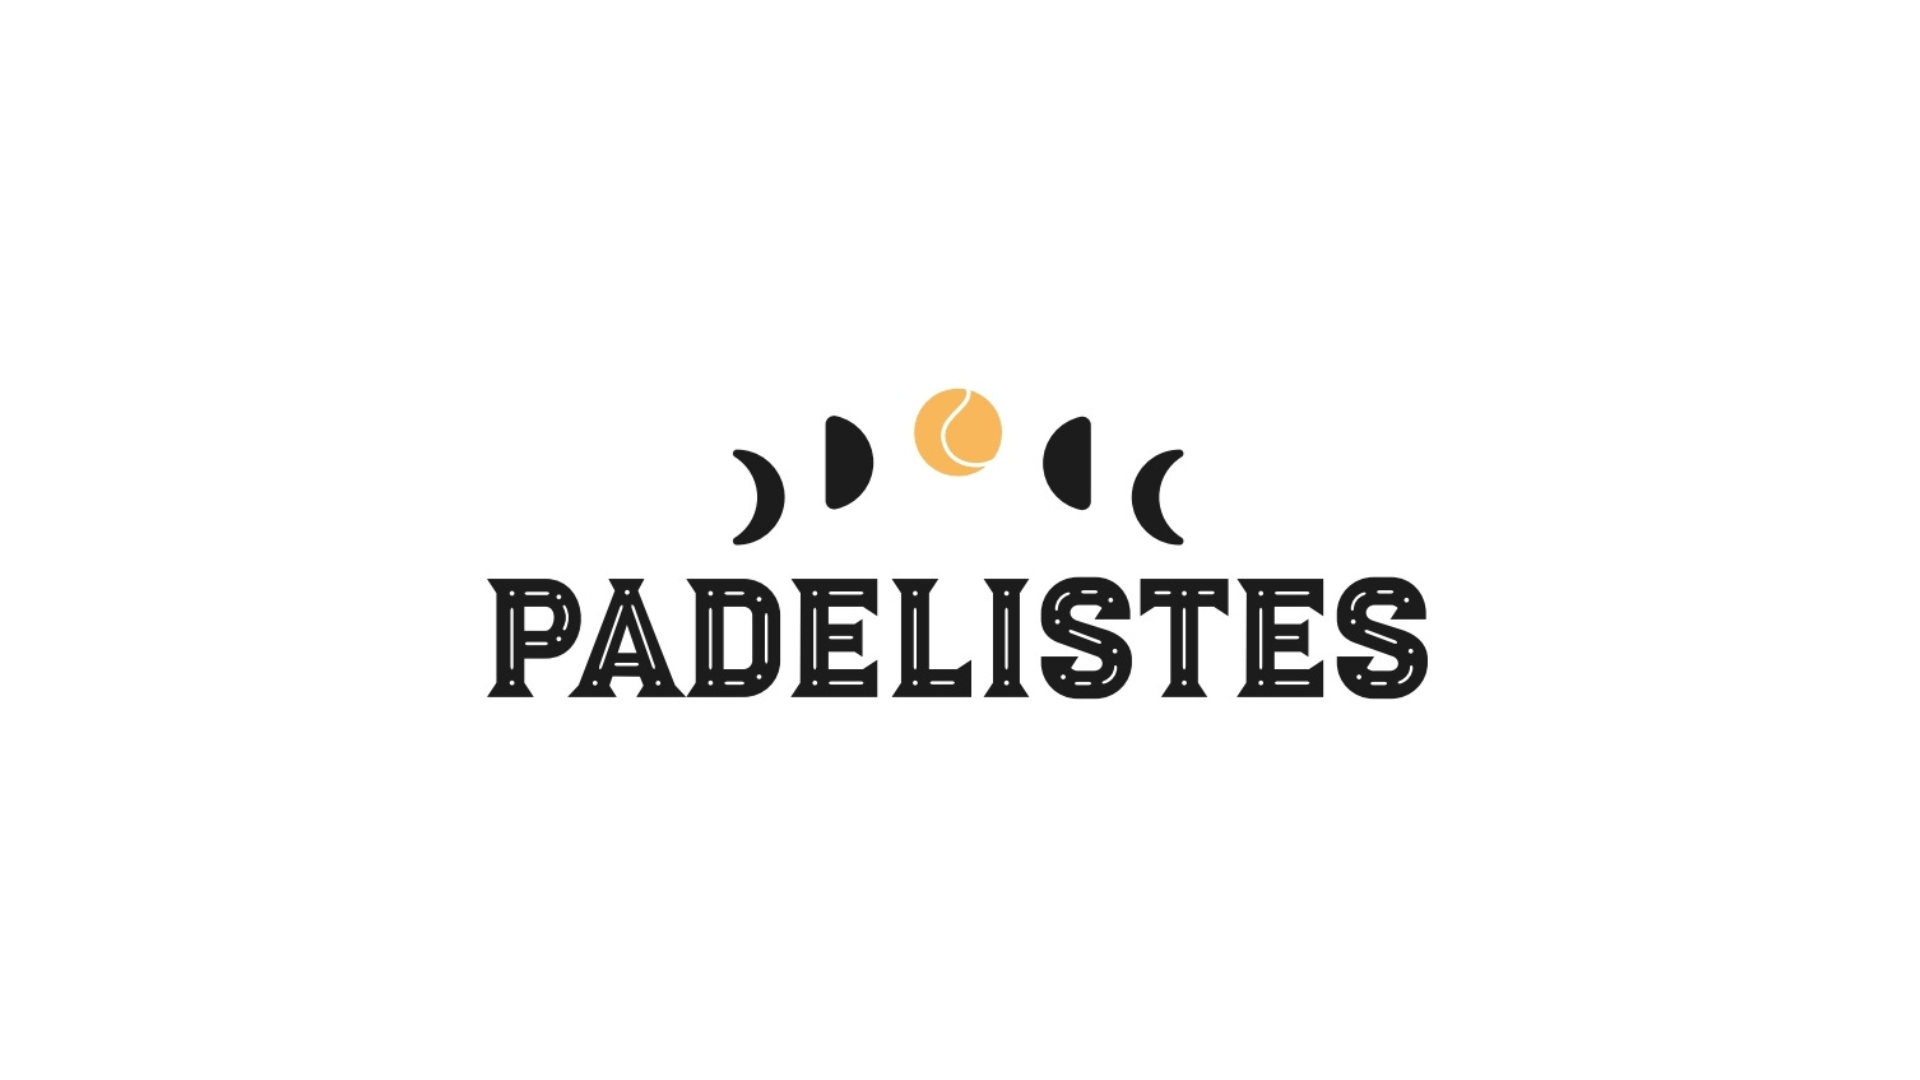 Padelists: a new Parisian club on the way!